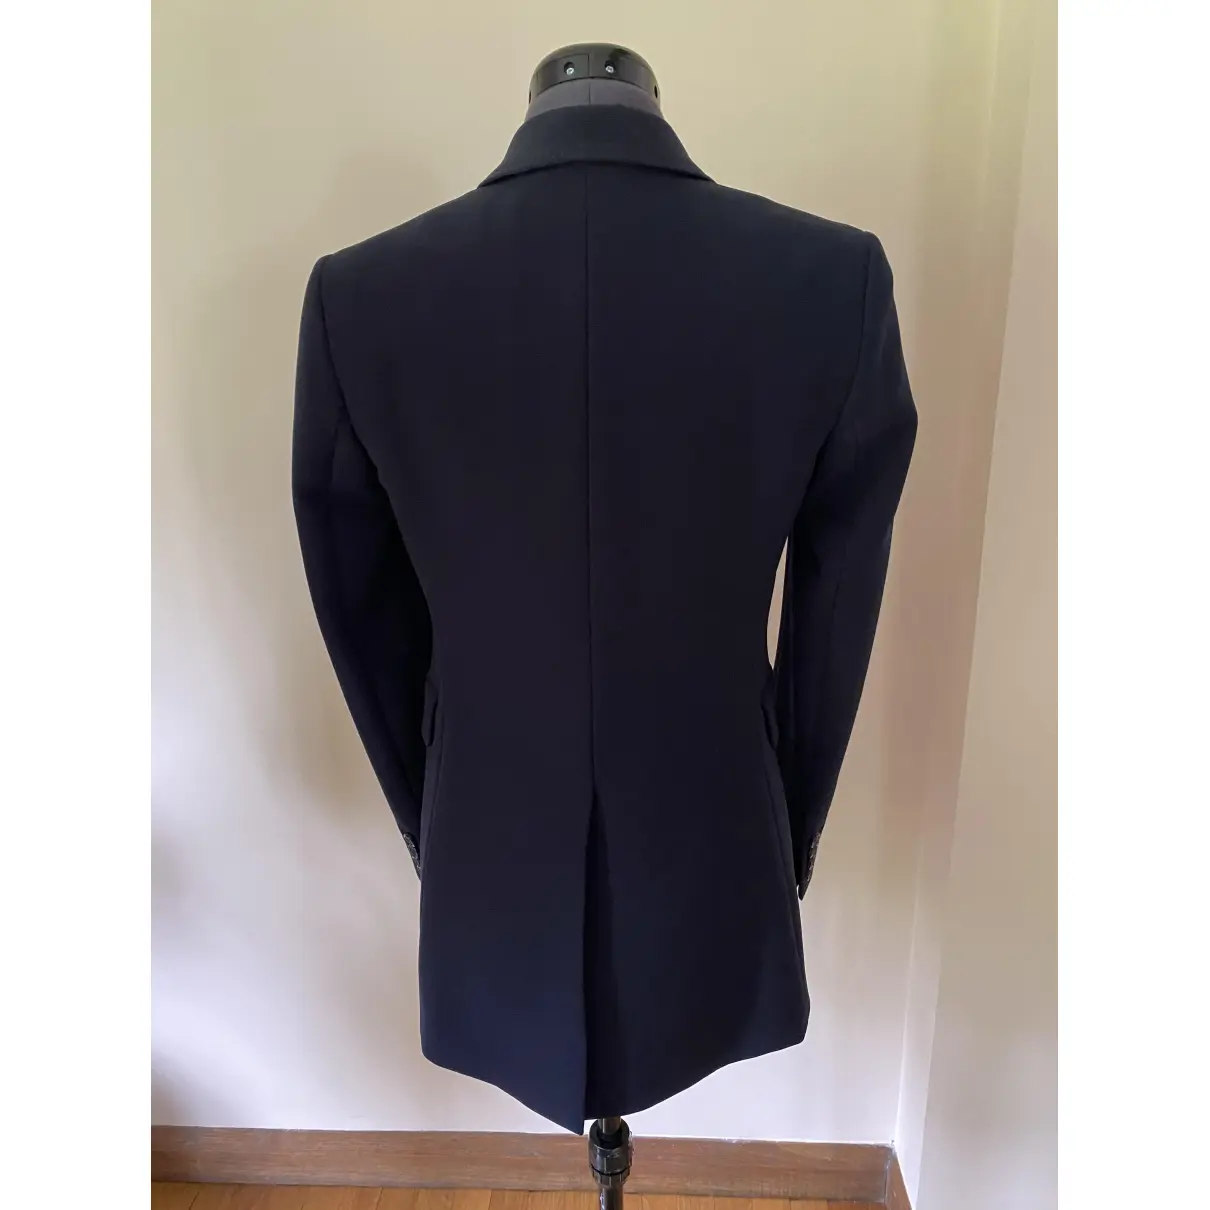 Buy Joseph Blue Polyester Jacket online